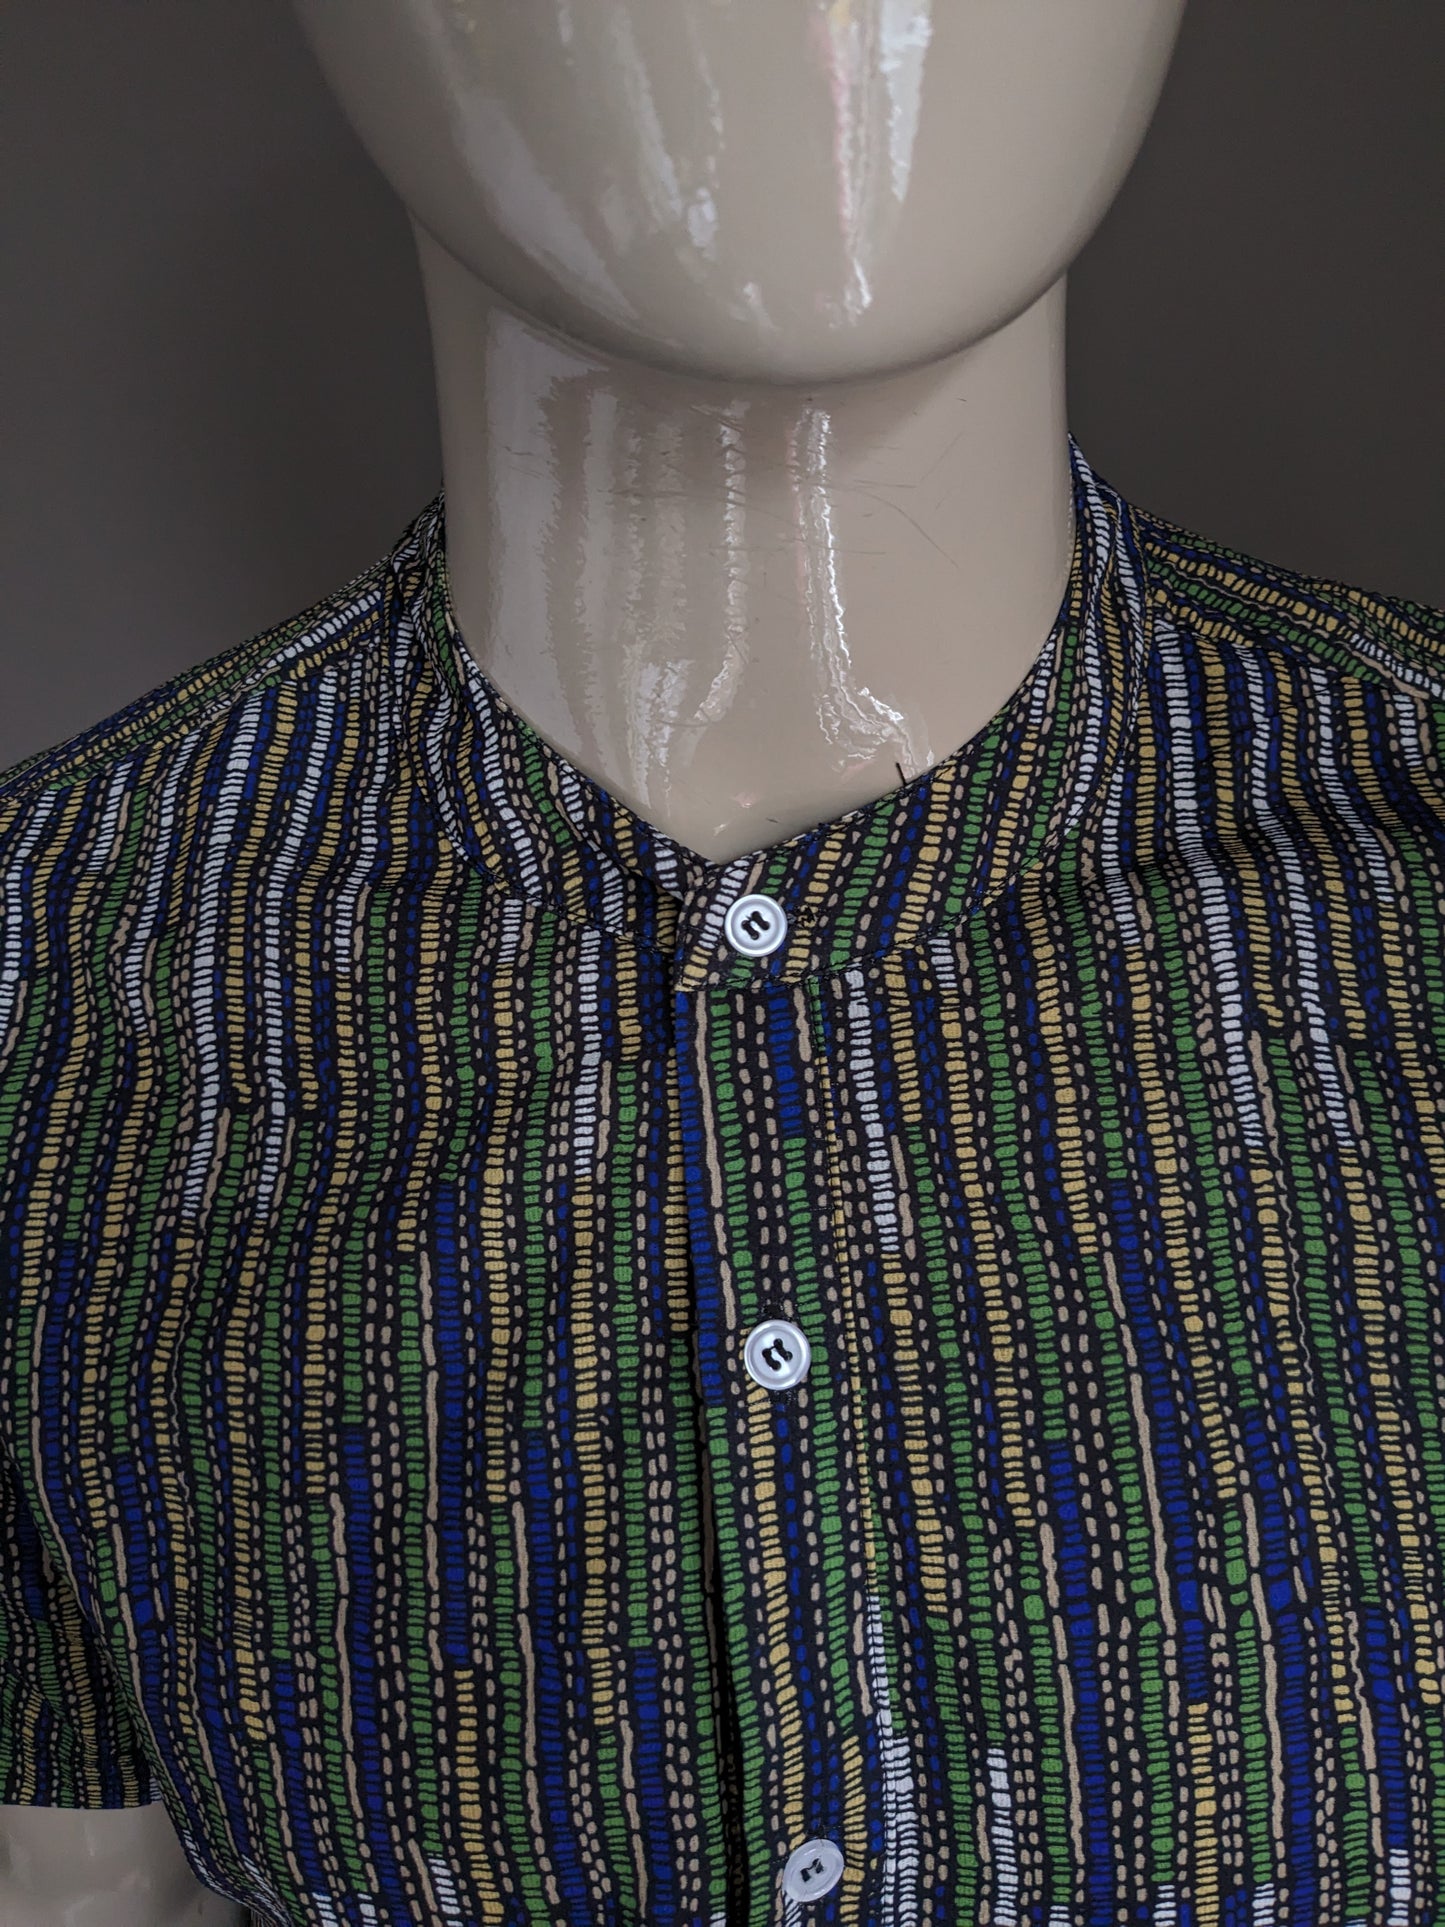 Vintage mao collar polo / shirt short sleeve. Green blue yellow print. Size M.